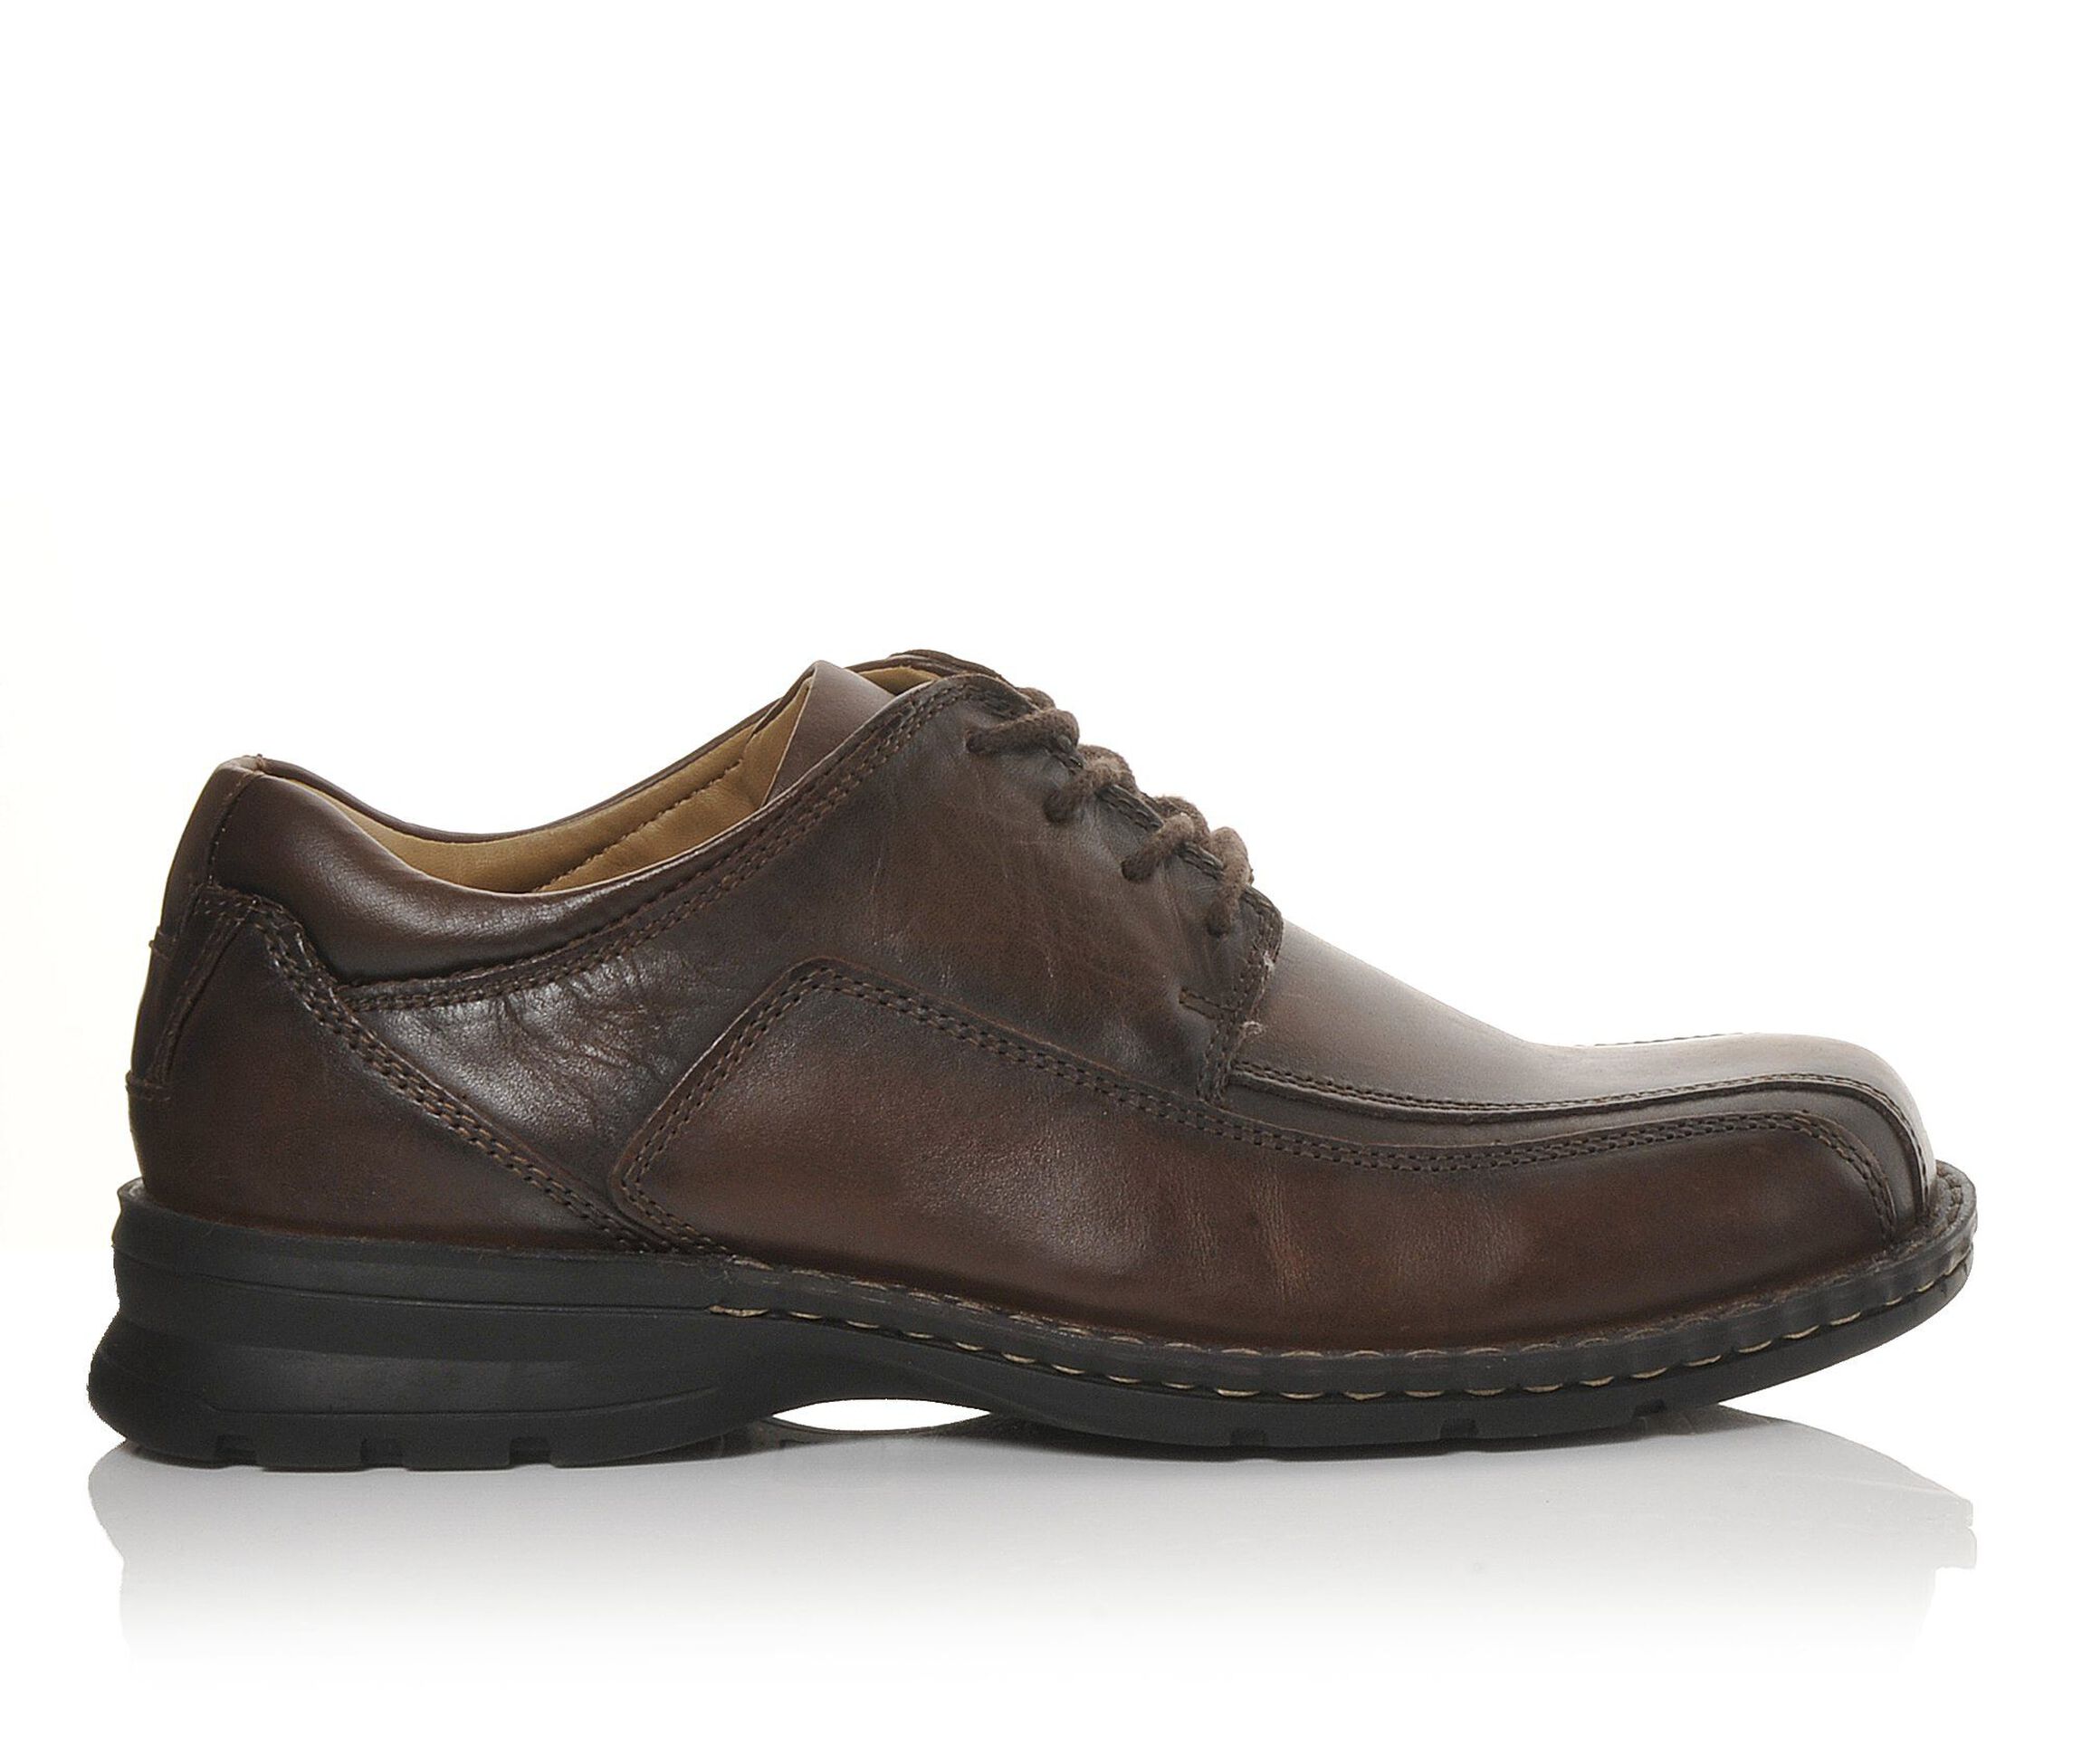 Men's Dockers Trustee Dress Shoes in Dark Tan Size 10.5 Wide